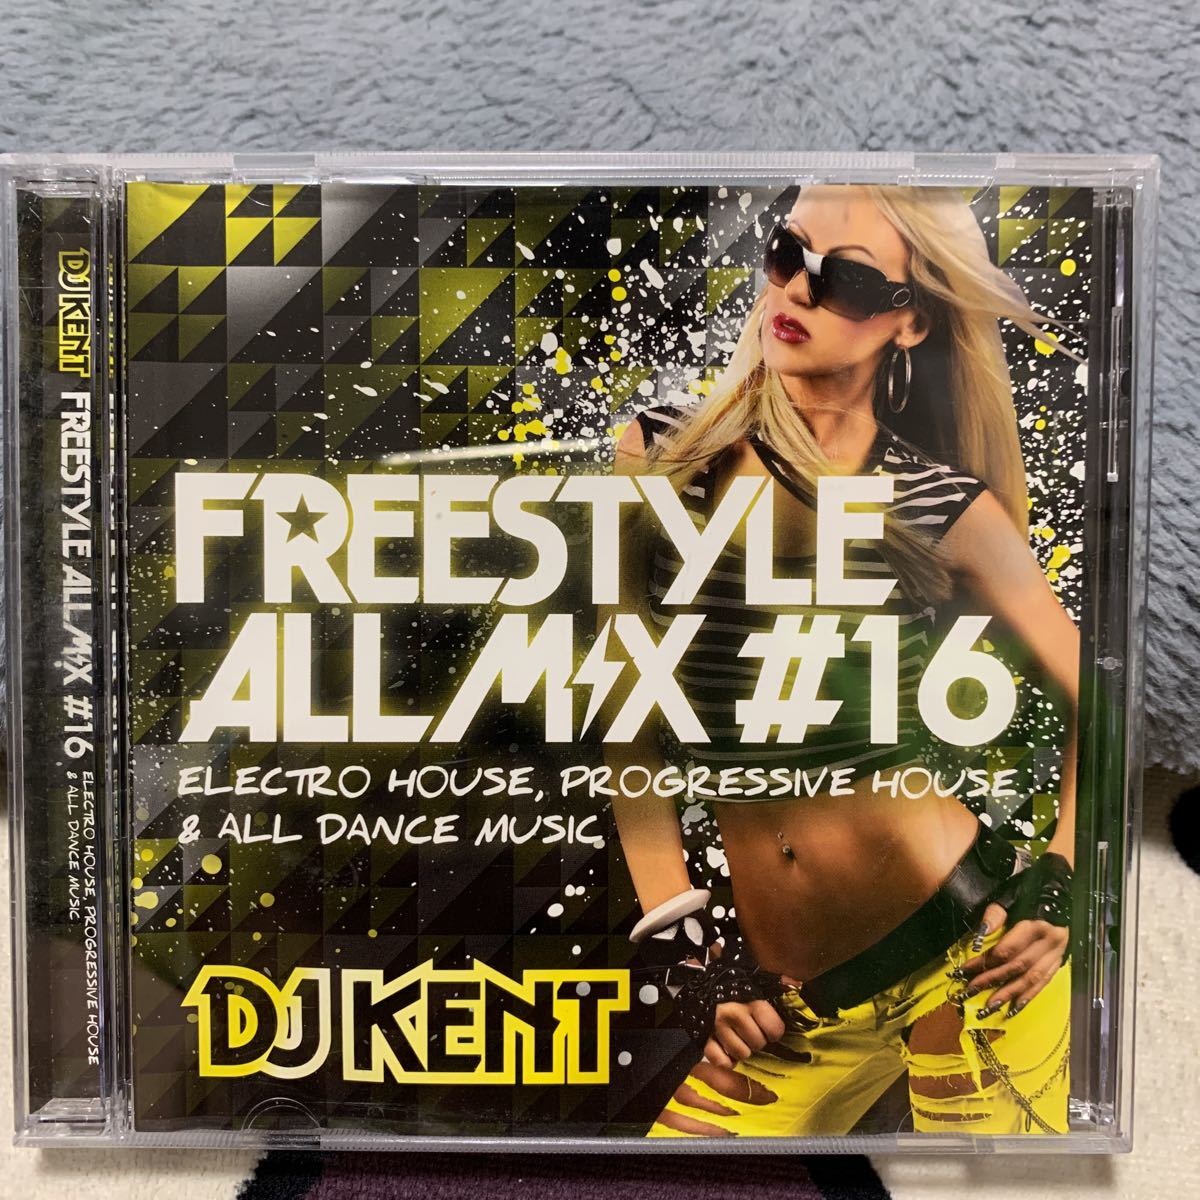 MIX CD DJ KENT/FREESTYLE ALL MIX #16